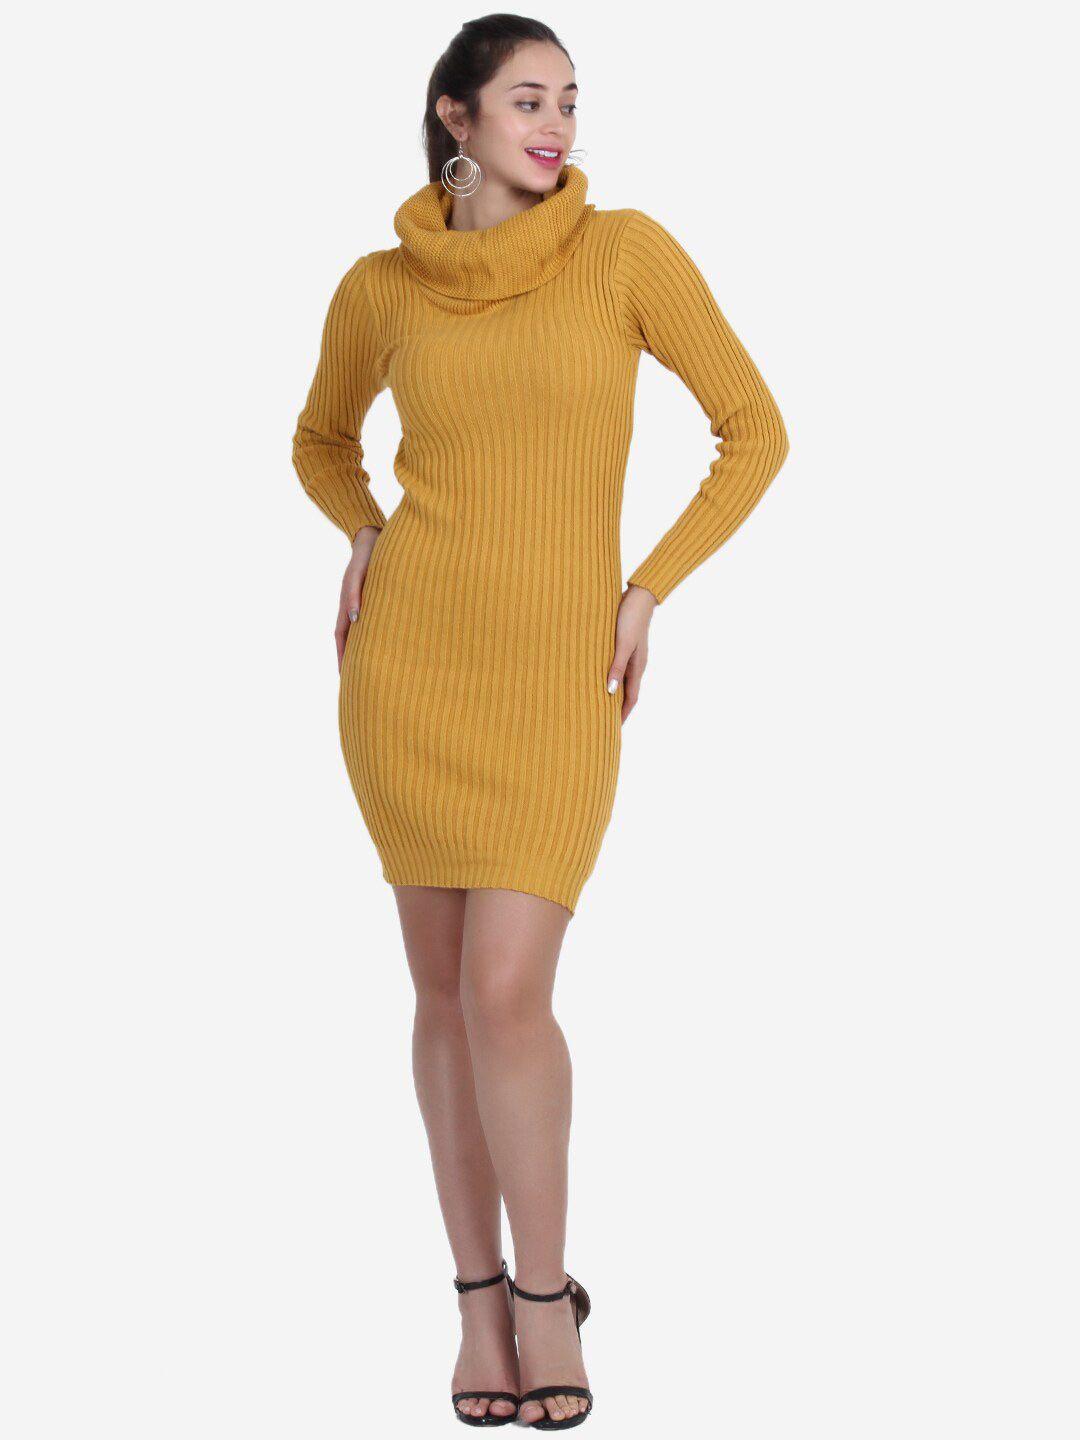 joe hazel mustard yellow striped jumper dress